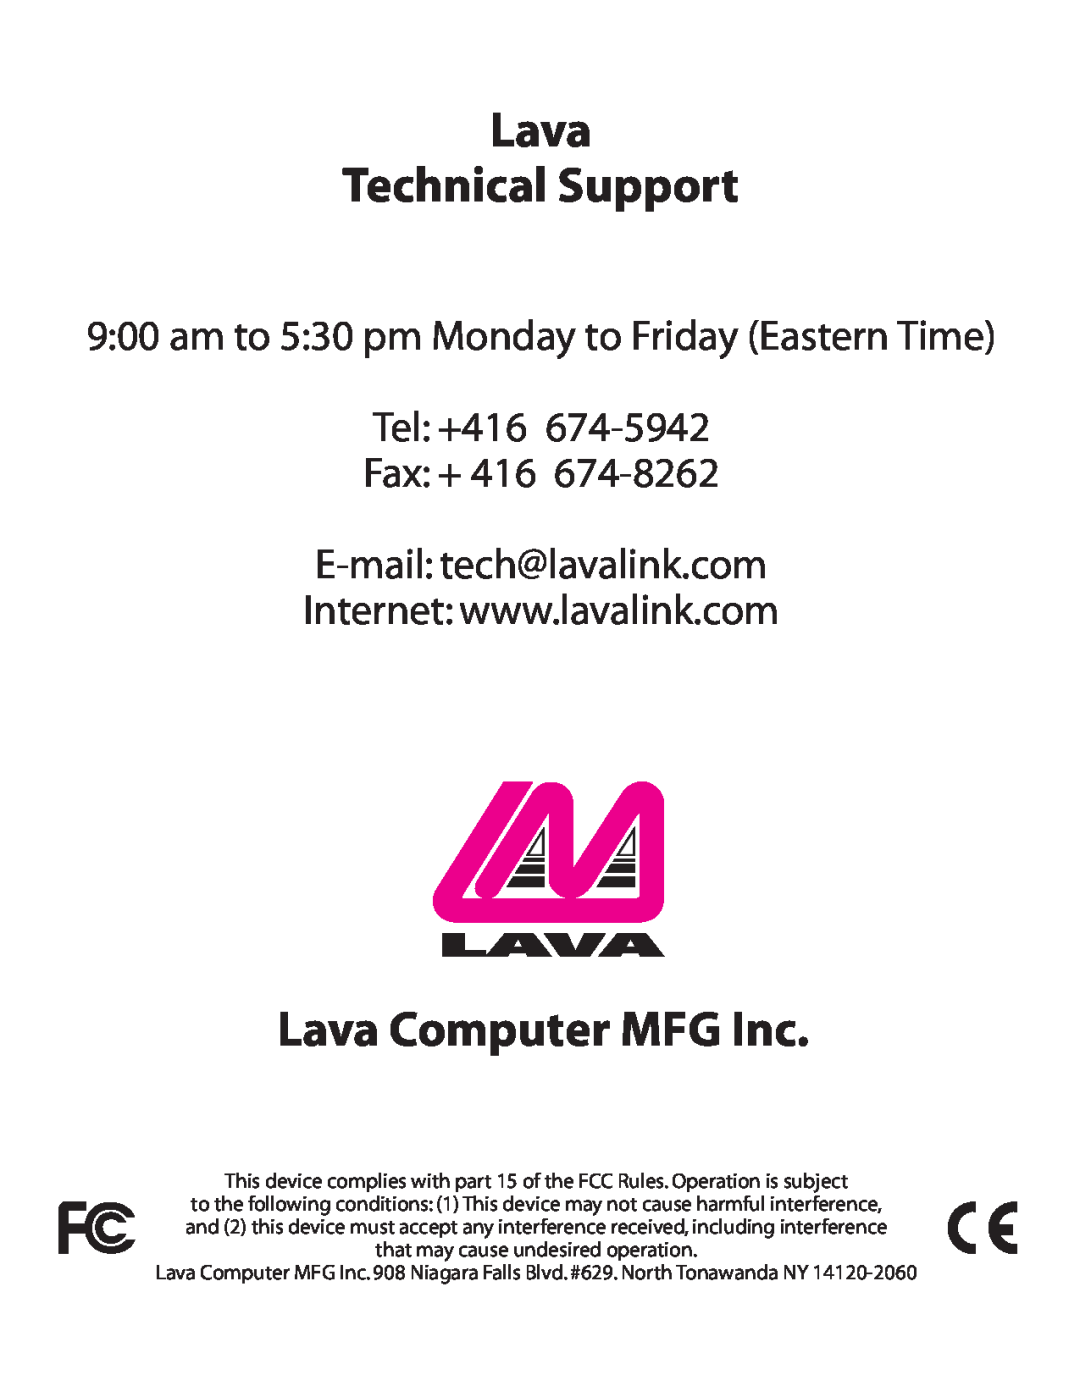 Lava Computer 2SP-550 installation manual Lava Technical Support, Lava Computer MFG Inc, E-mail tech@lavalink.com 